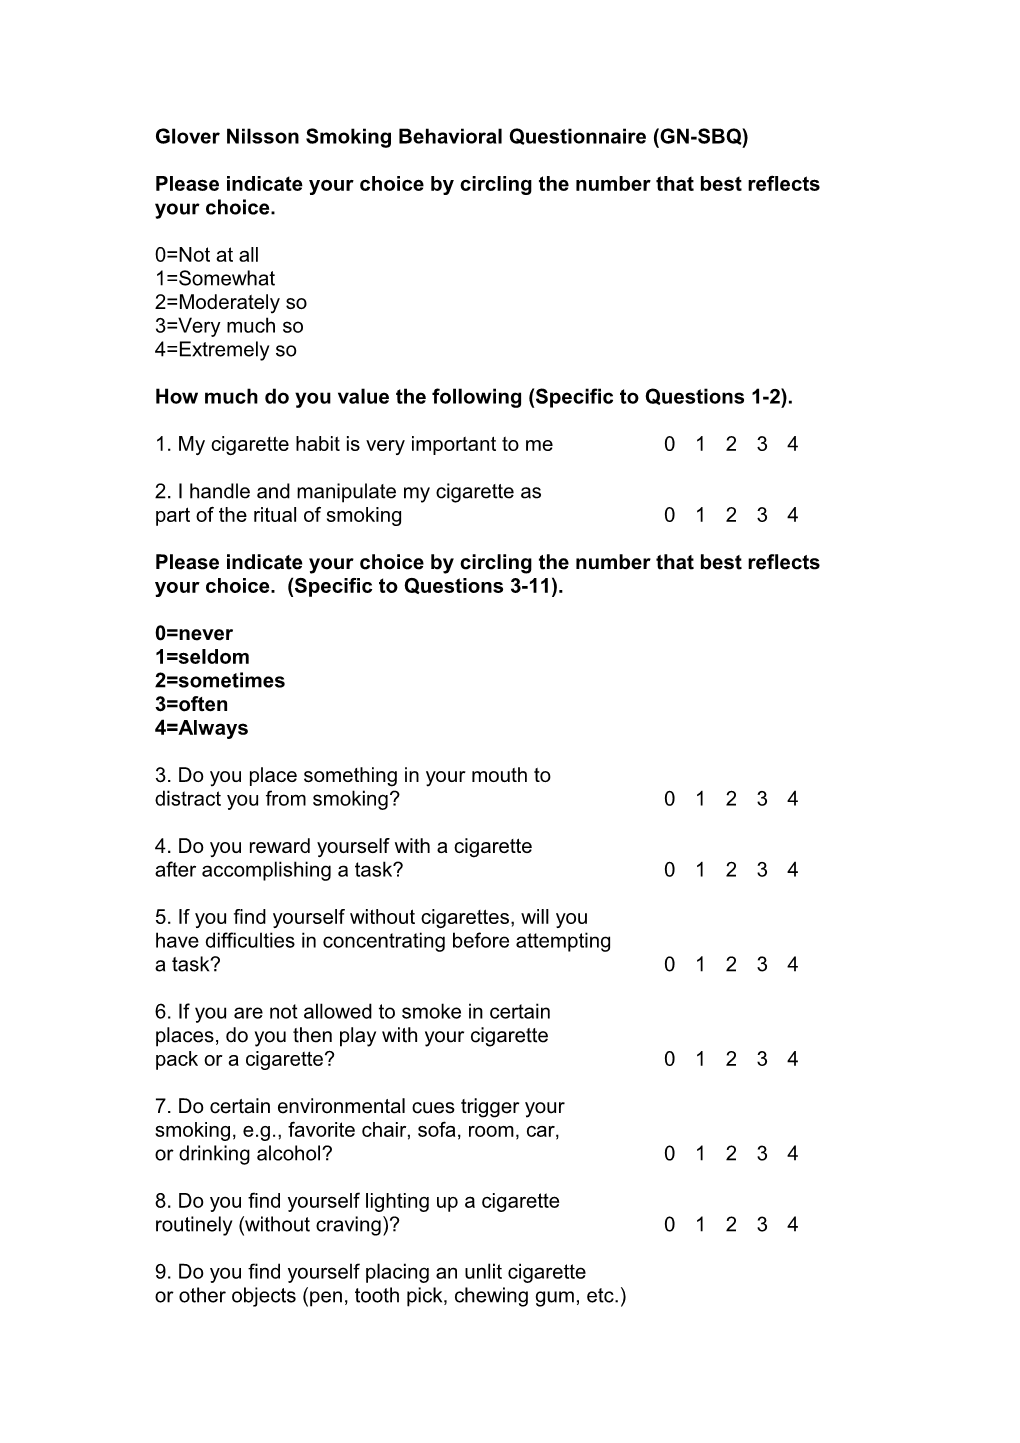 Glover Nilsson Smoking Behavioral Questionnaire (GN-SBQ)